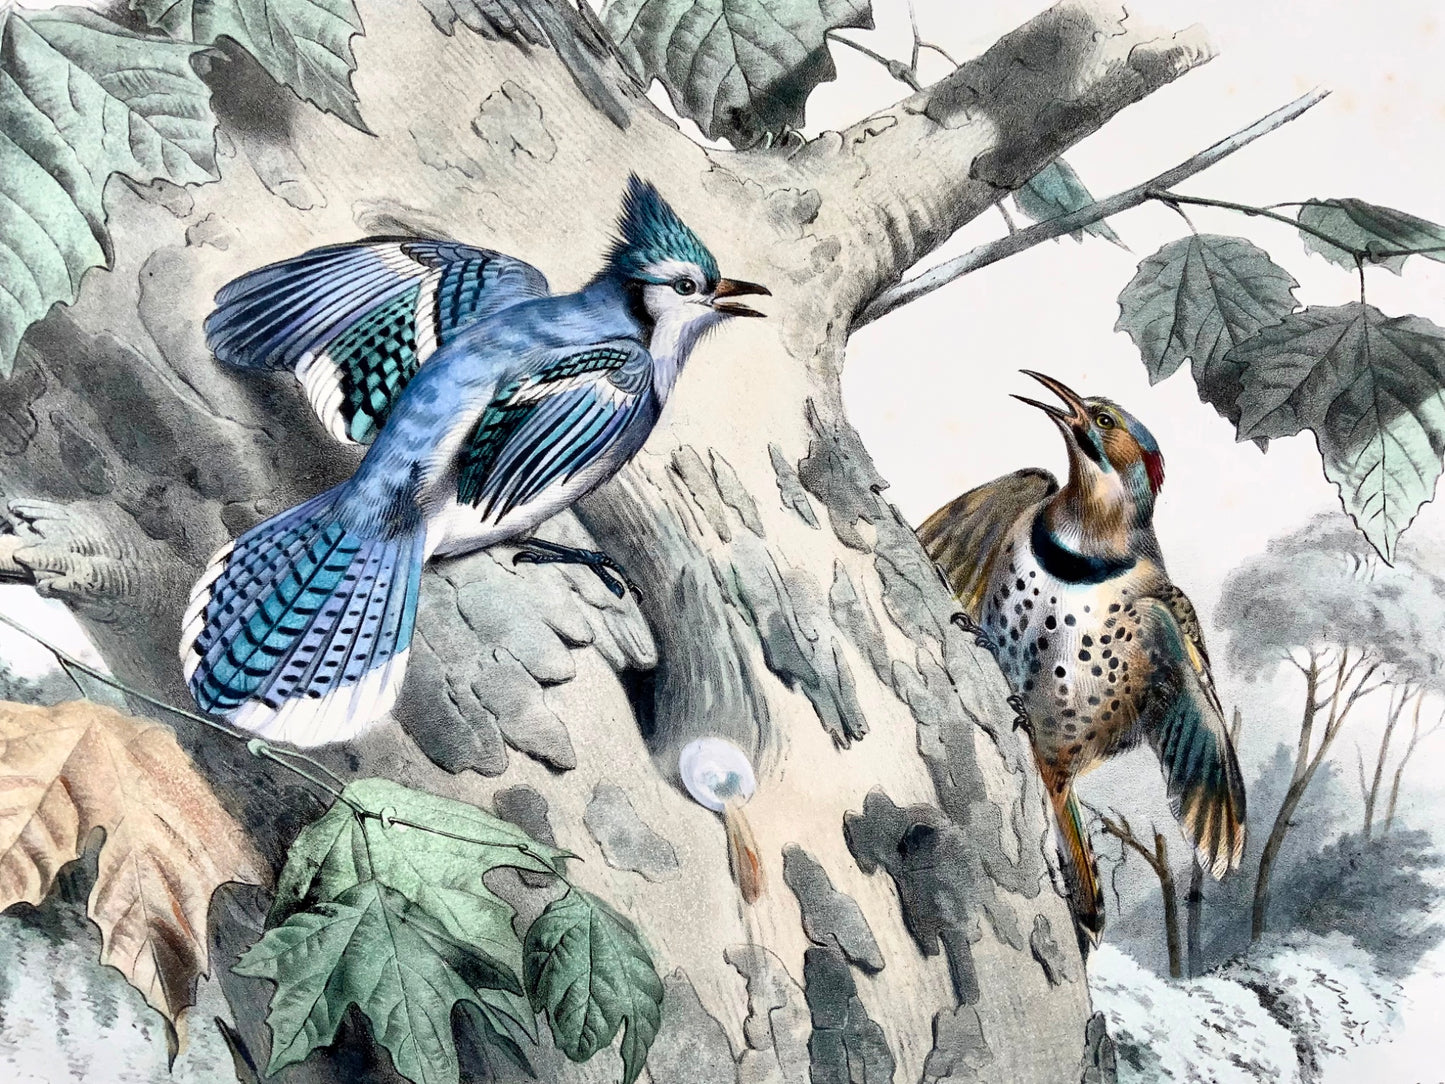 1857 Ed Travies [b1809] 45 x 62cm, Le Geai bleu, Le pic, ornithology